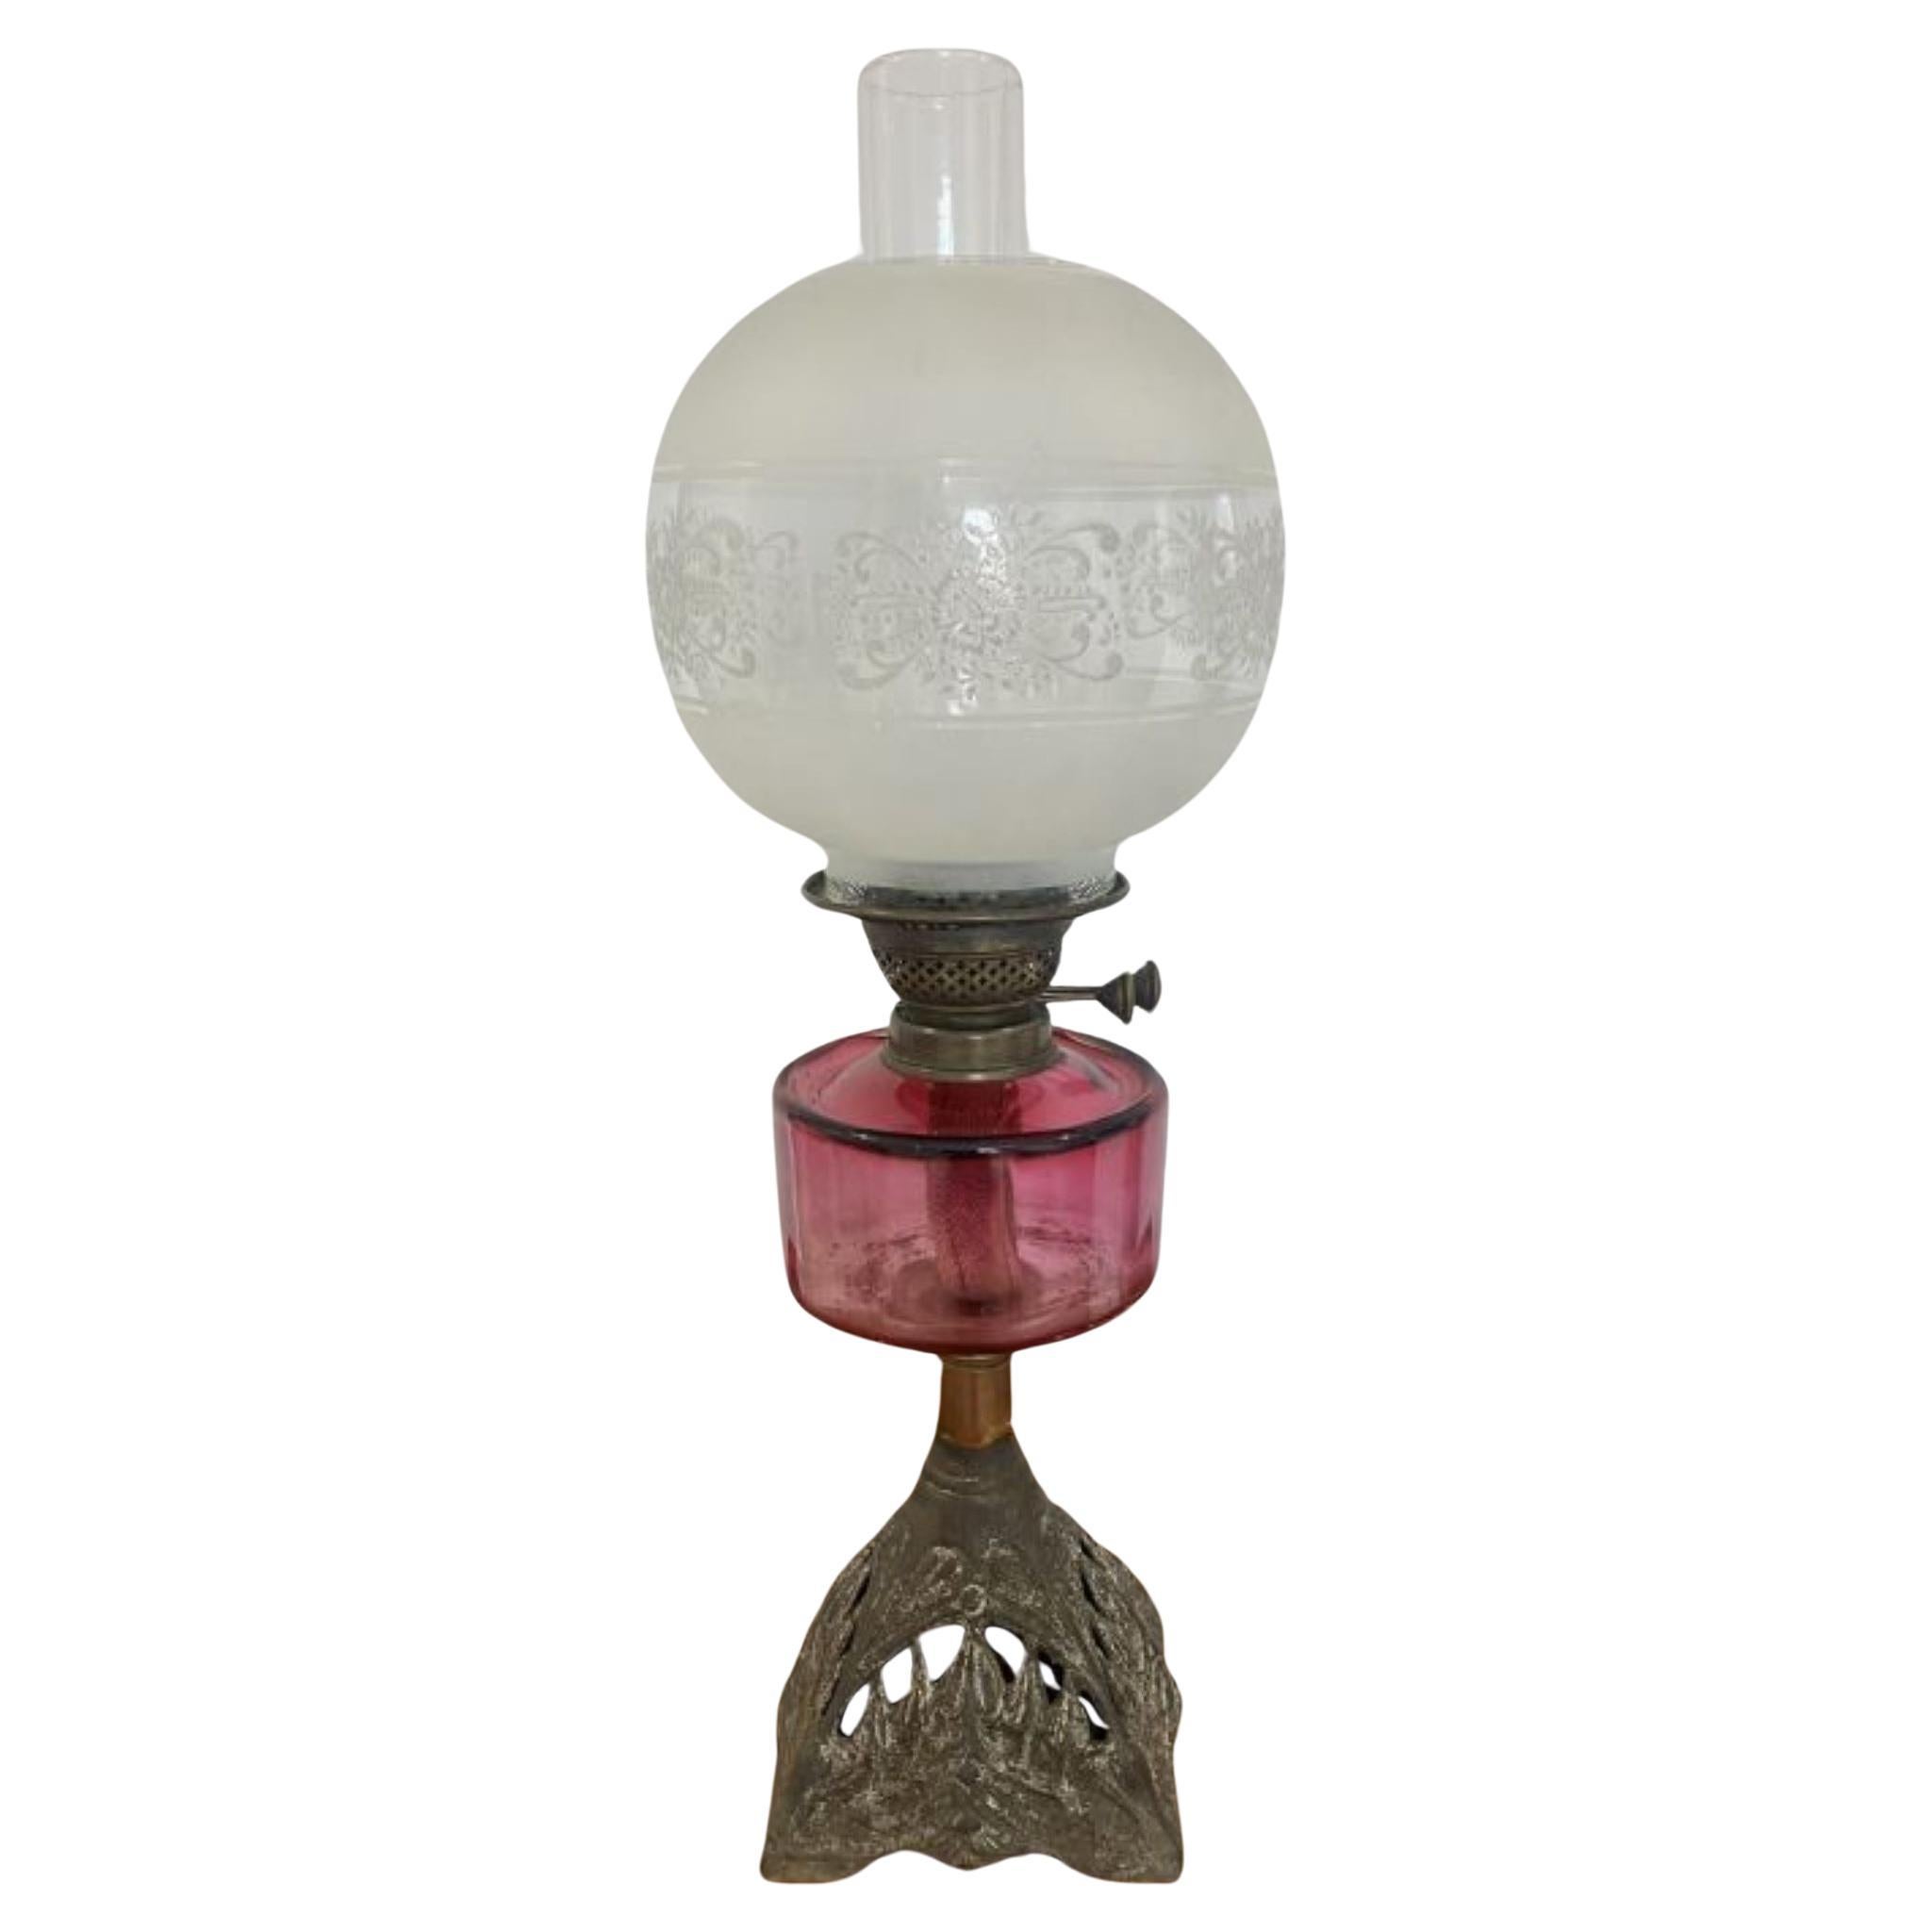 Antique Victorian cranberry glass oil lamp